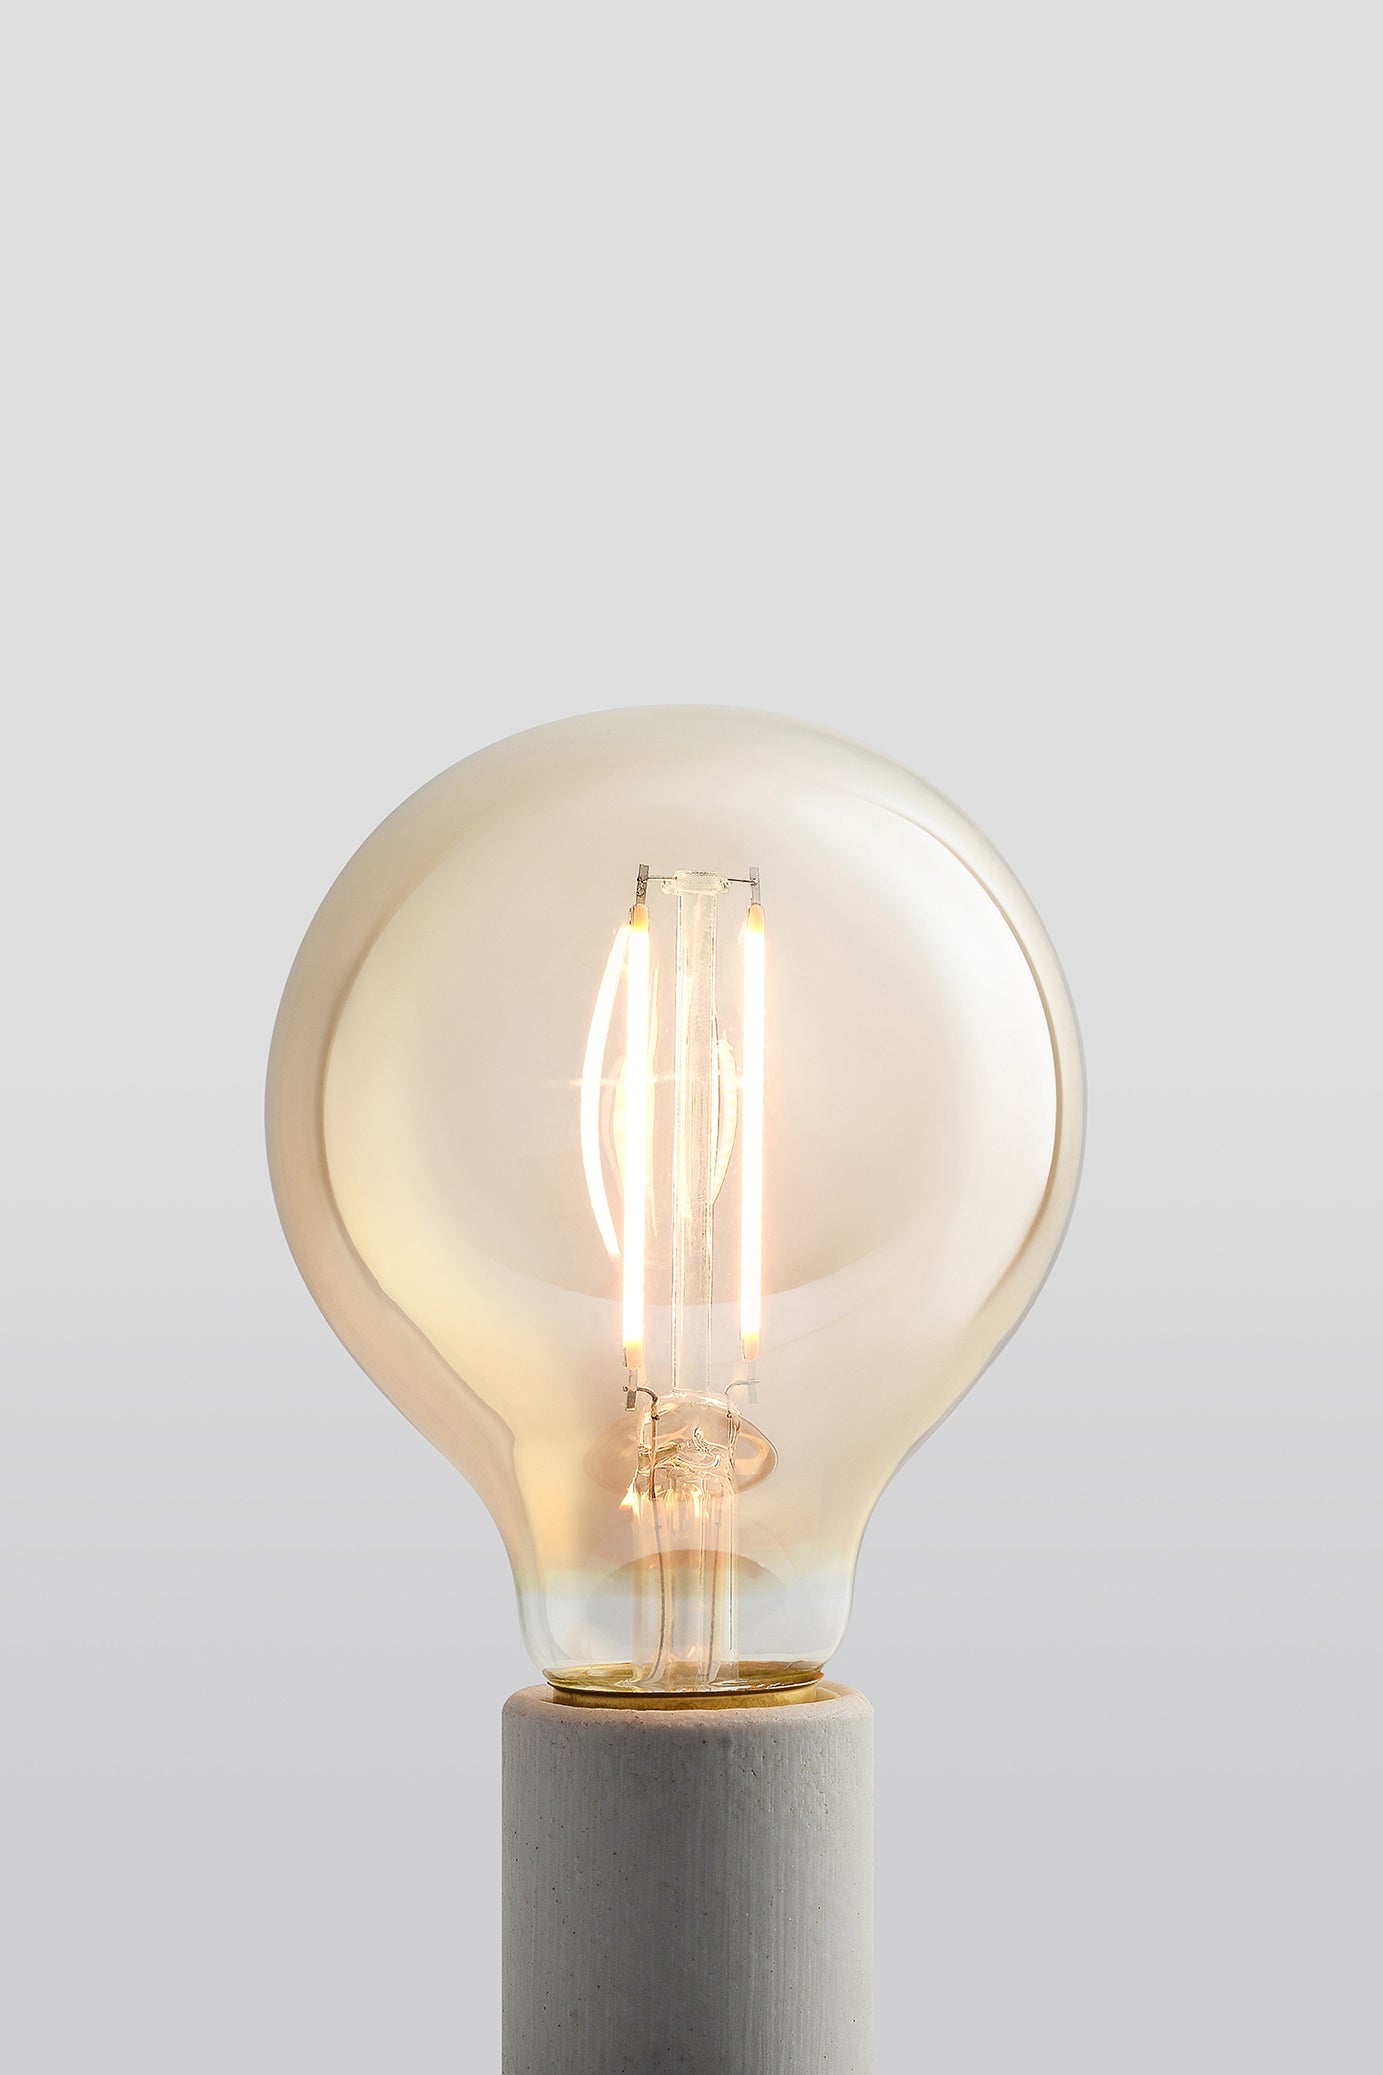 Modern G25 LED light bulb with warm vintage Edison style glow